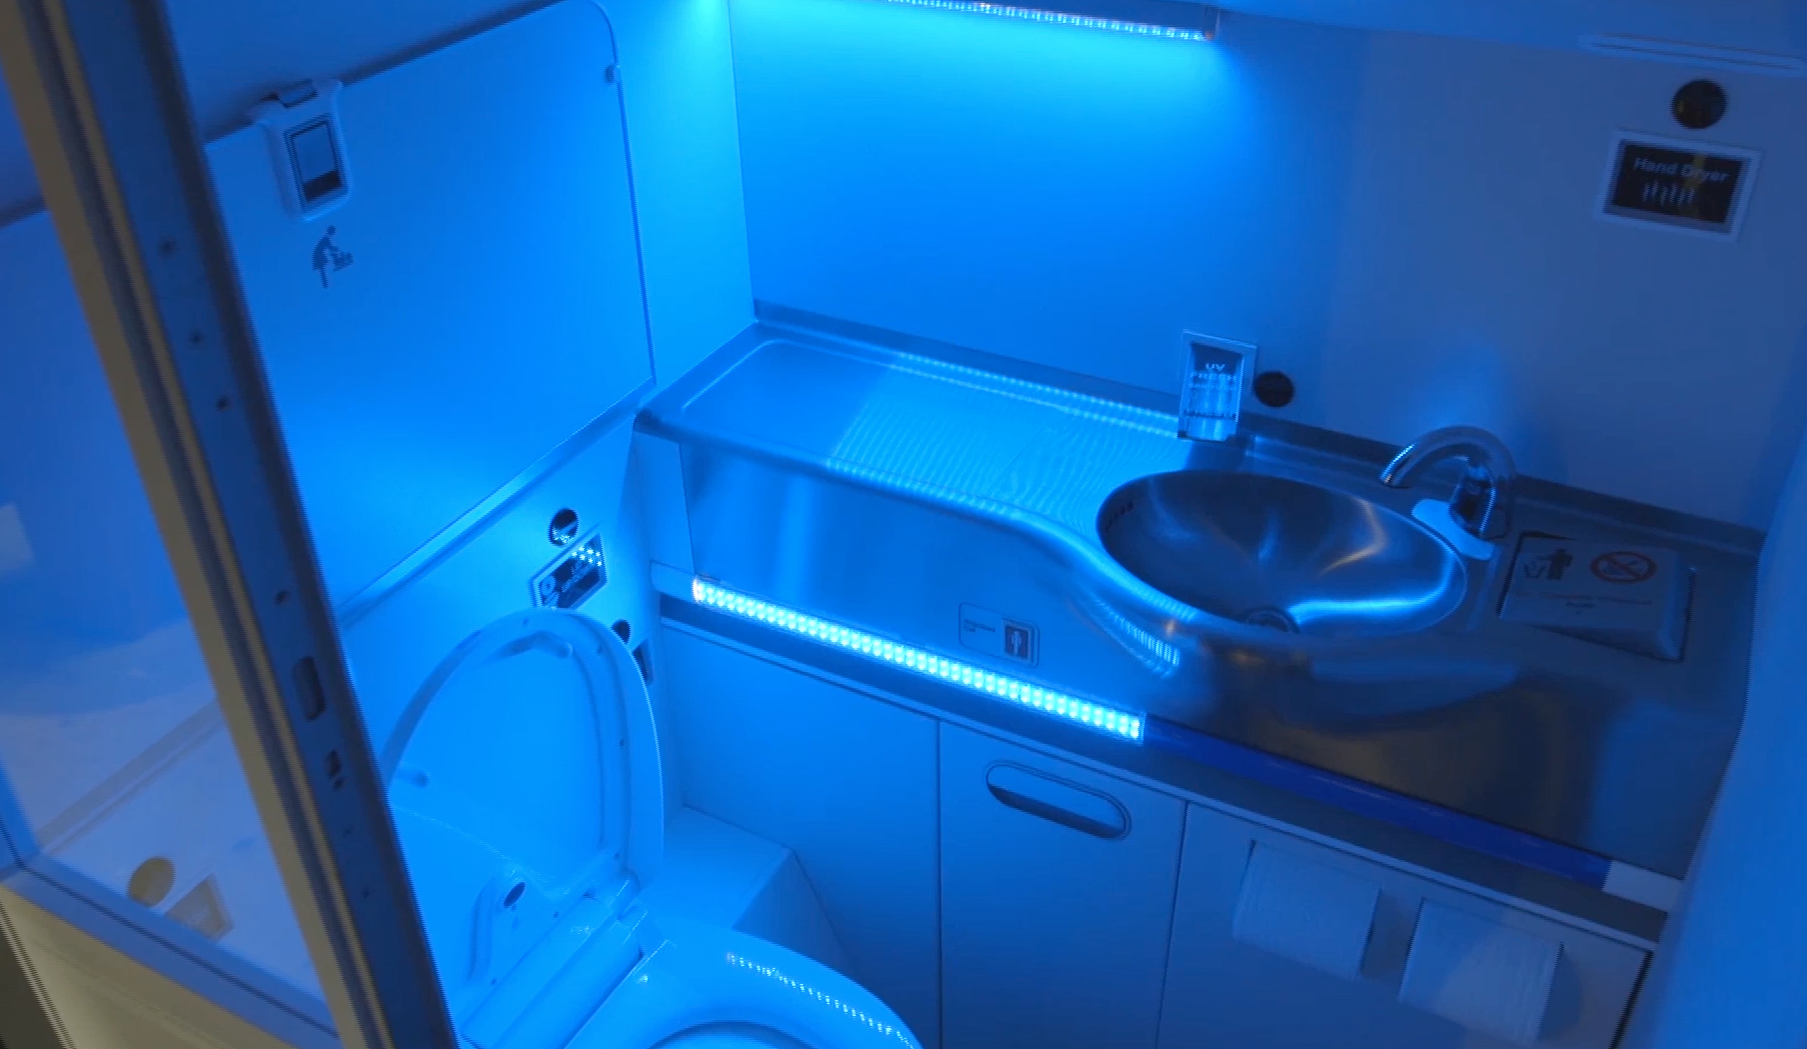 Boeing's self-cleaning lavatory zaps UV light - CBS News